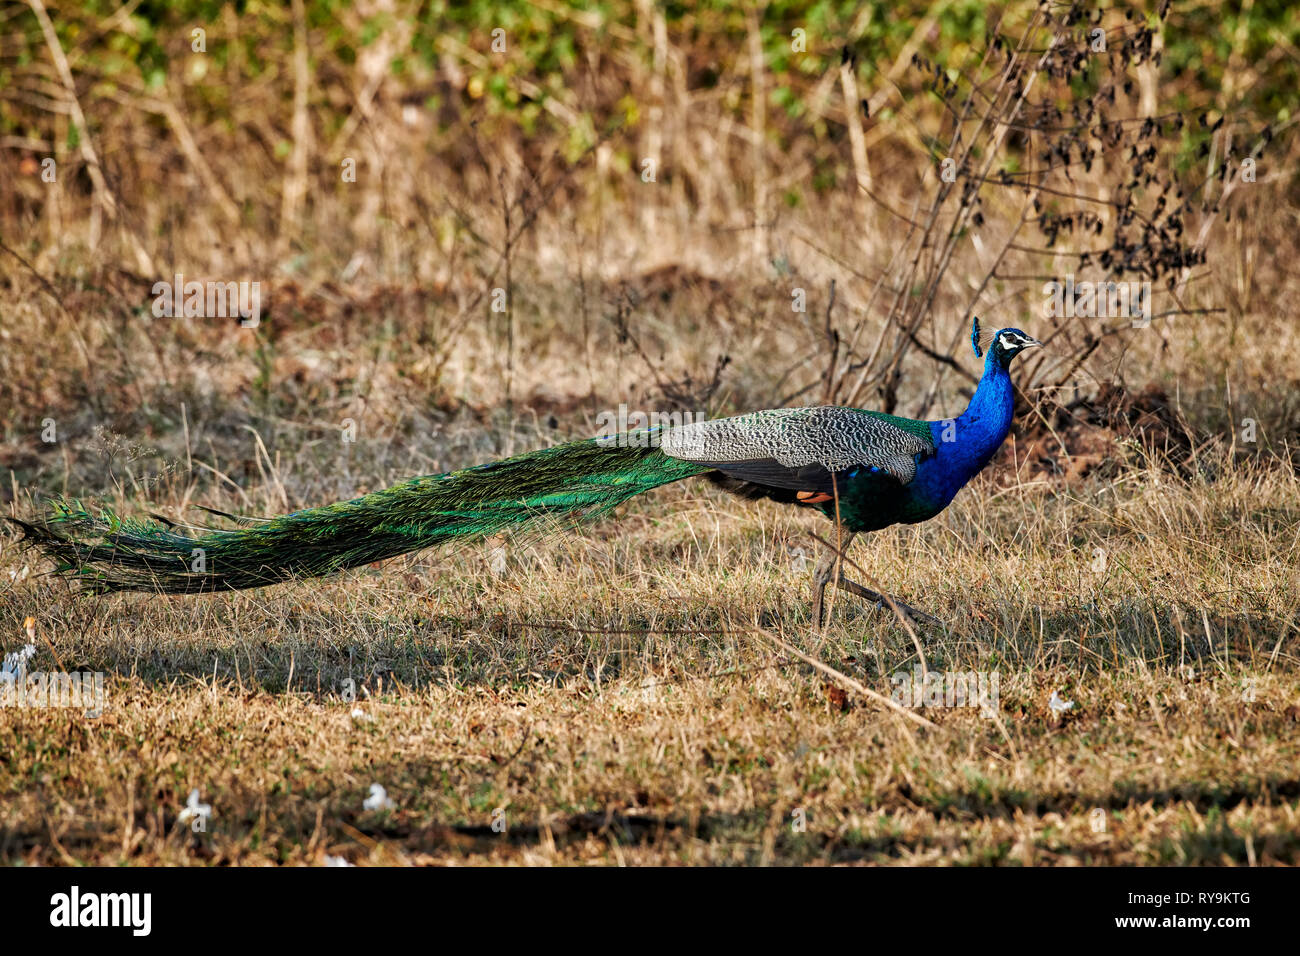 Peacock, commune ou paons Indiens paons bleus, Pavo cristatus, Bandipur Tiger Reserve, Karnataka, Inde Banque D'Images